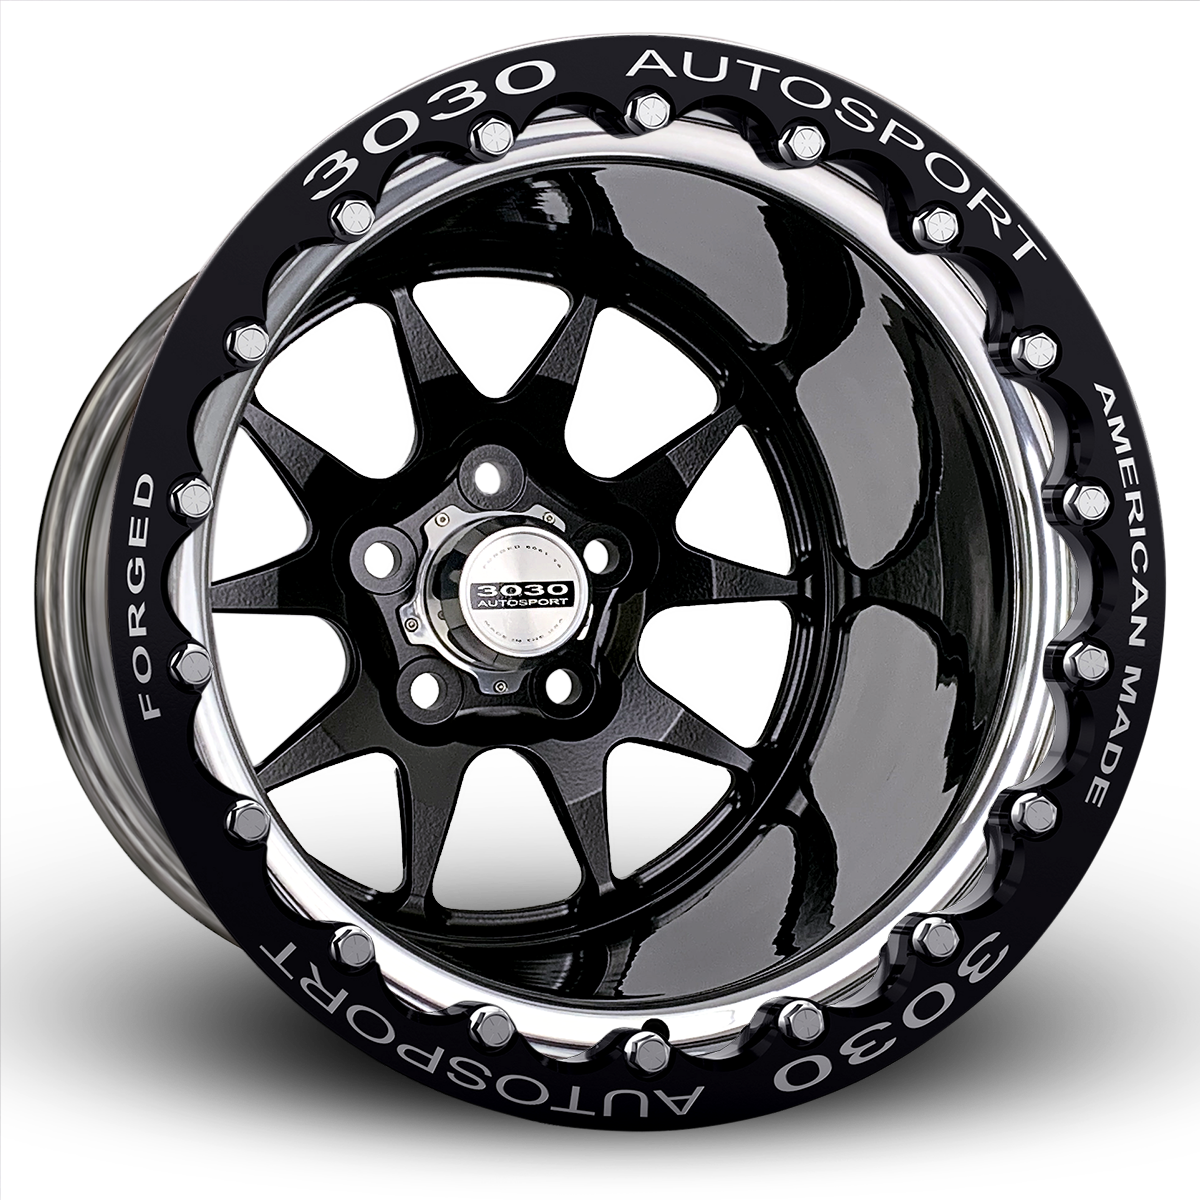 MACH-10 Double-Beadlock Wheel, Size: 15x12", Bolt Pattern: 5x4.5", Backspace: 4" [Black/Polished]